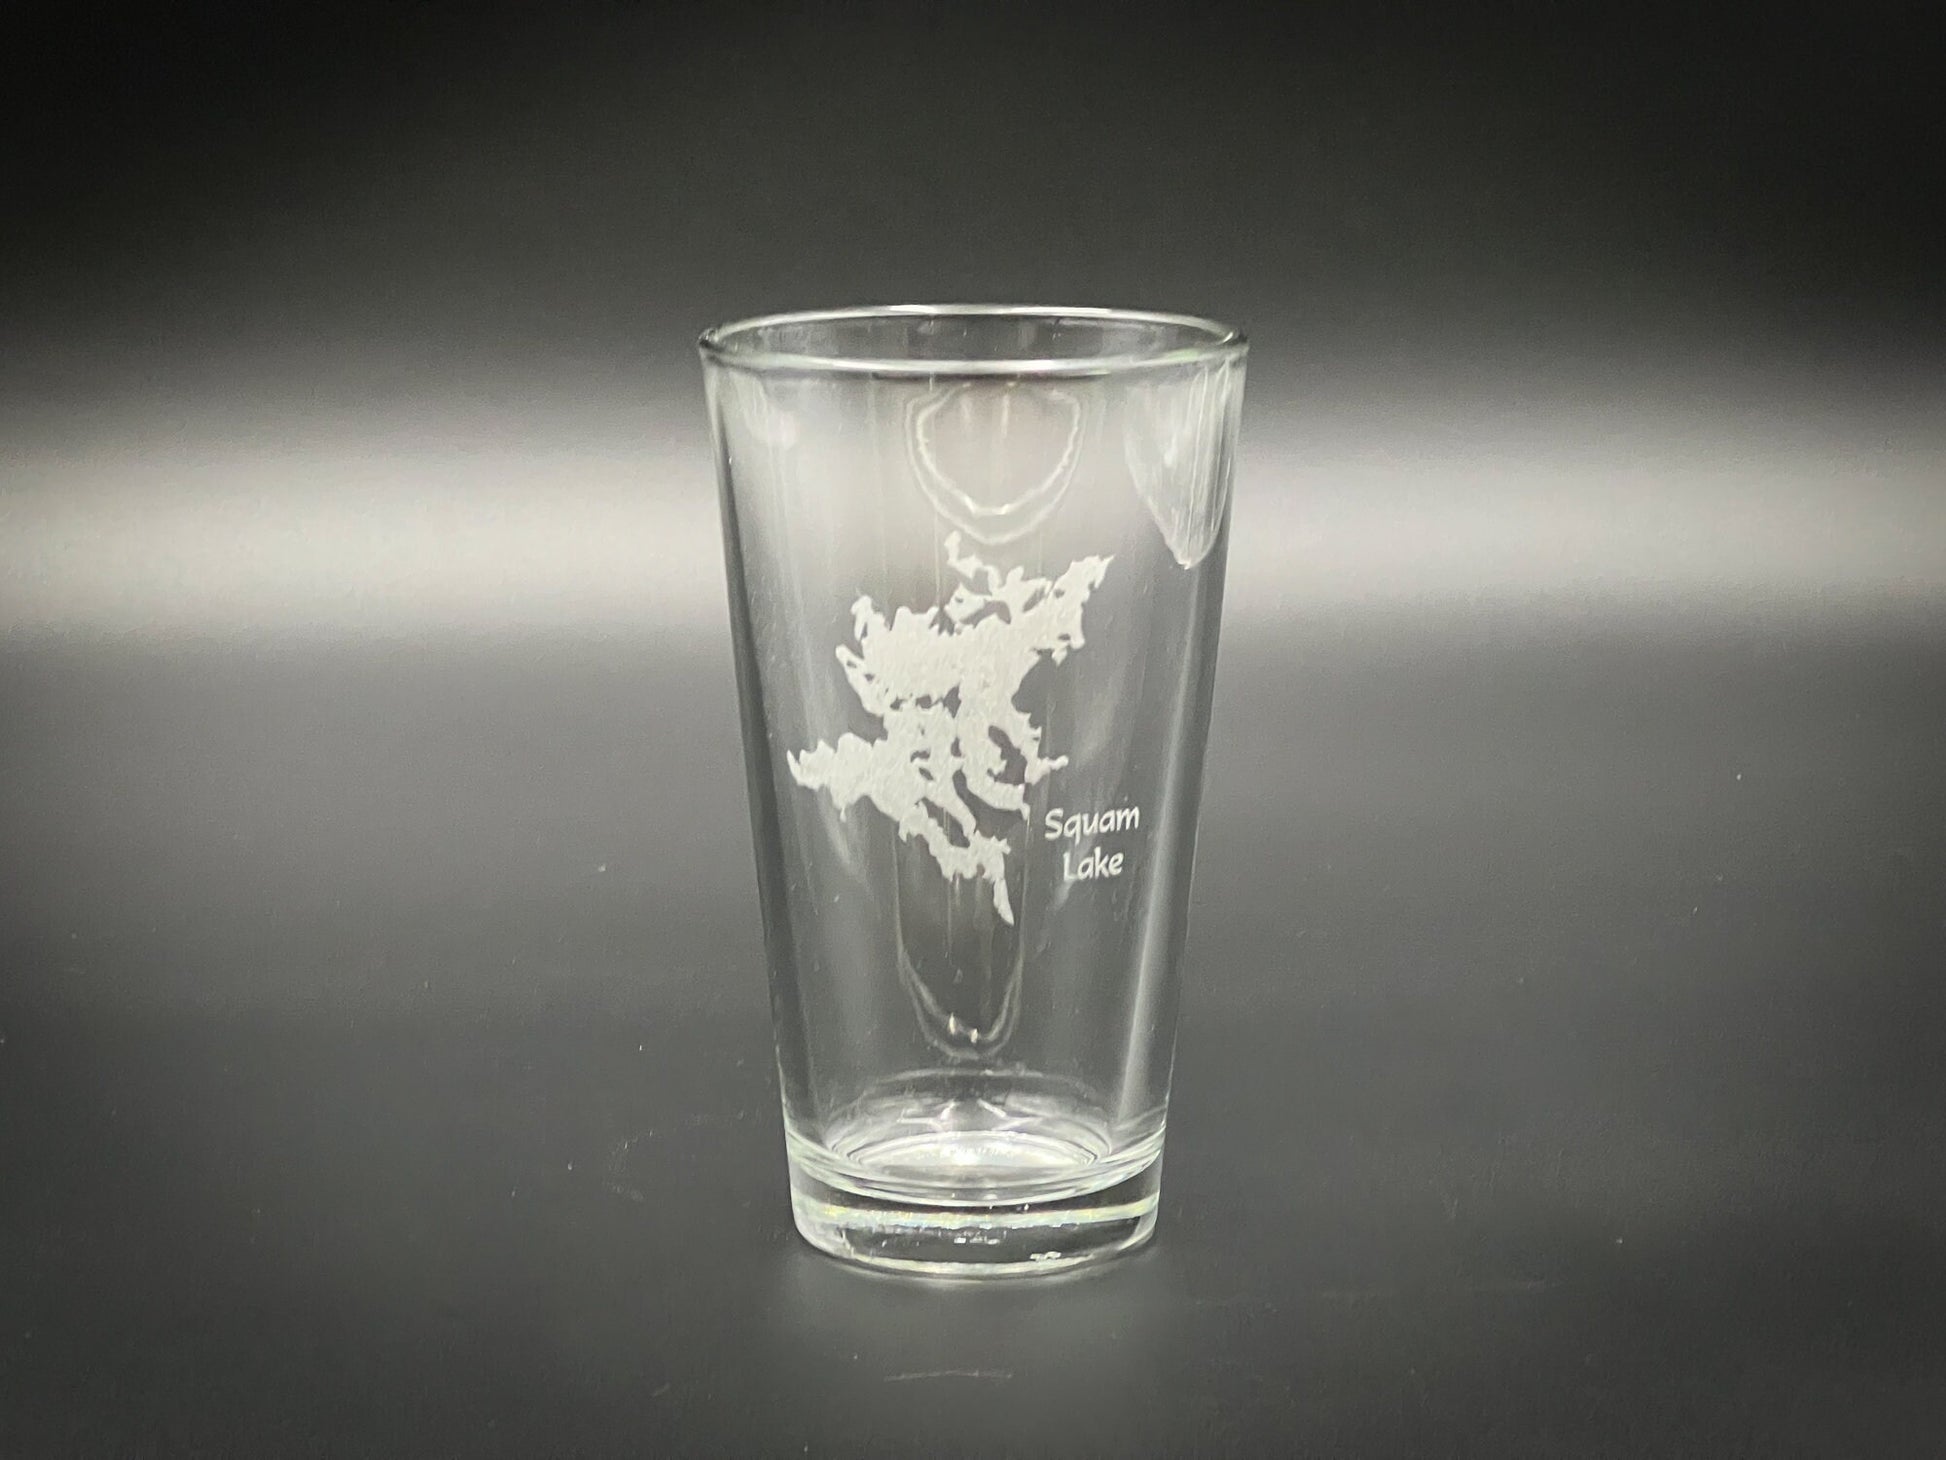 Squam Lake New Hampshire Pint Glass - Laser engraved pint glass